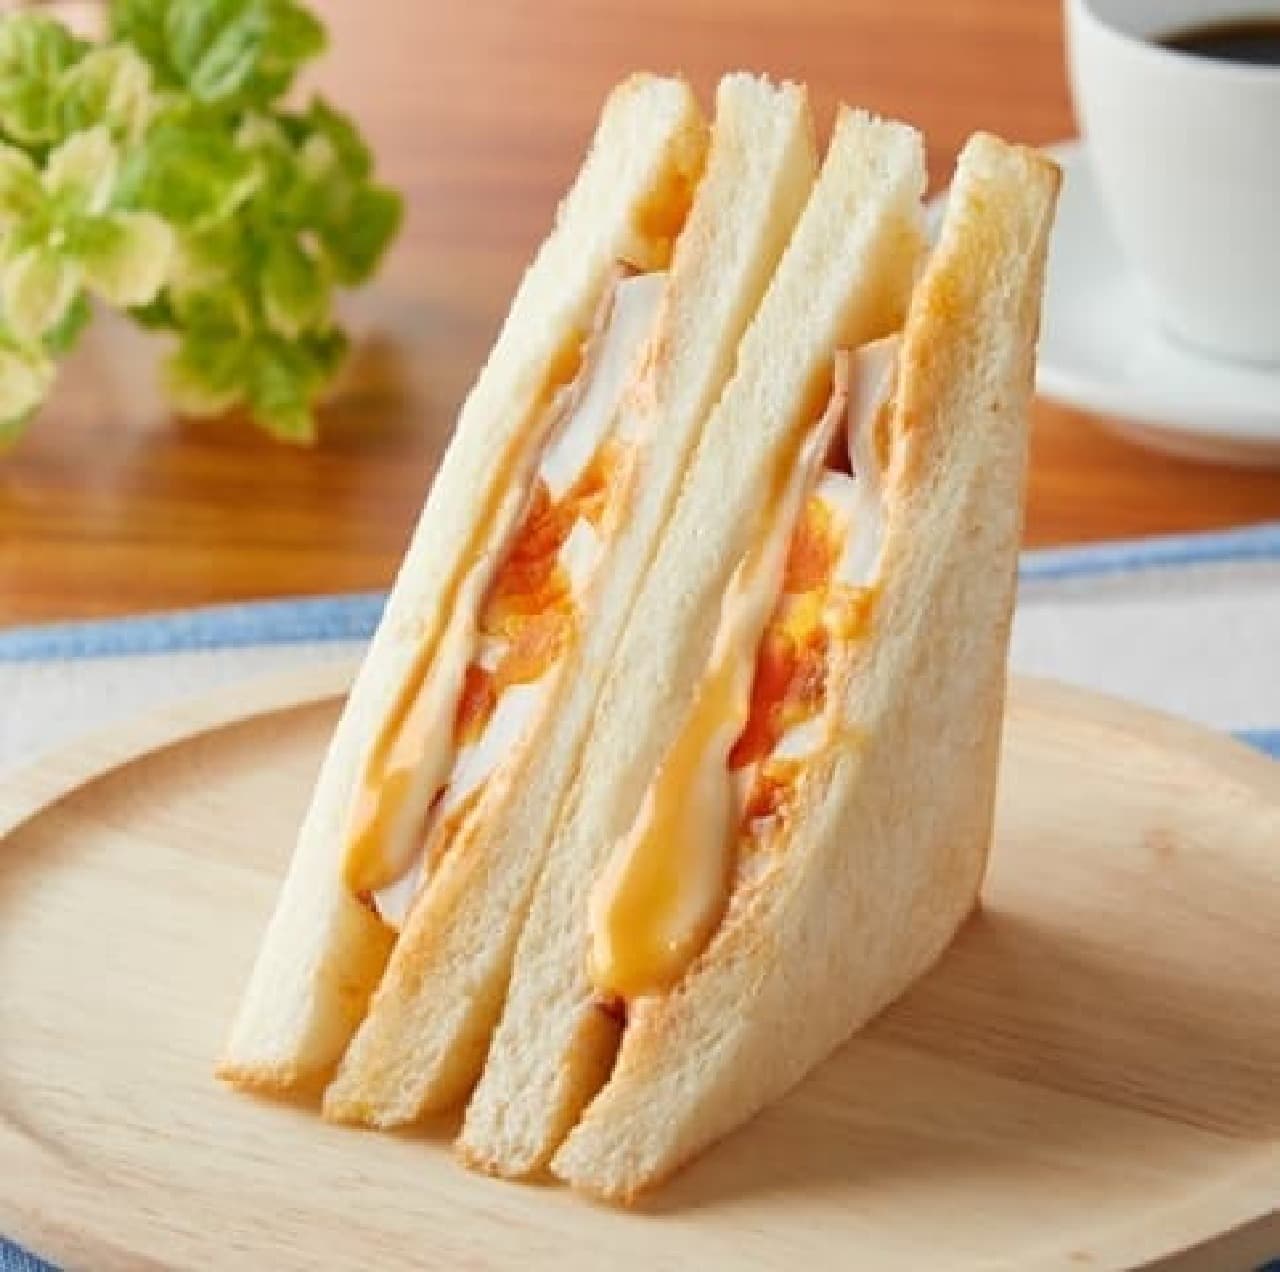 FamilyMart "HOT Sandwich Ham and Eggs & Meita Cheese Sauce"